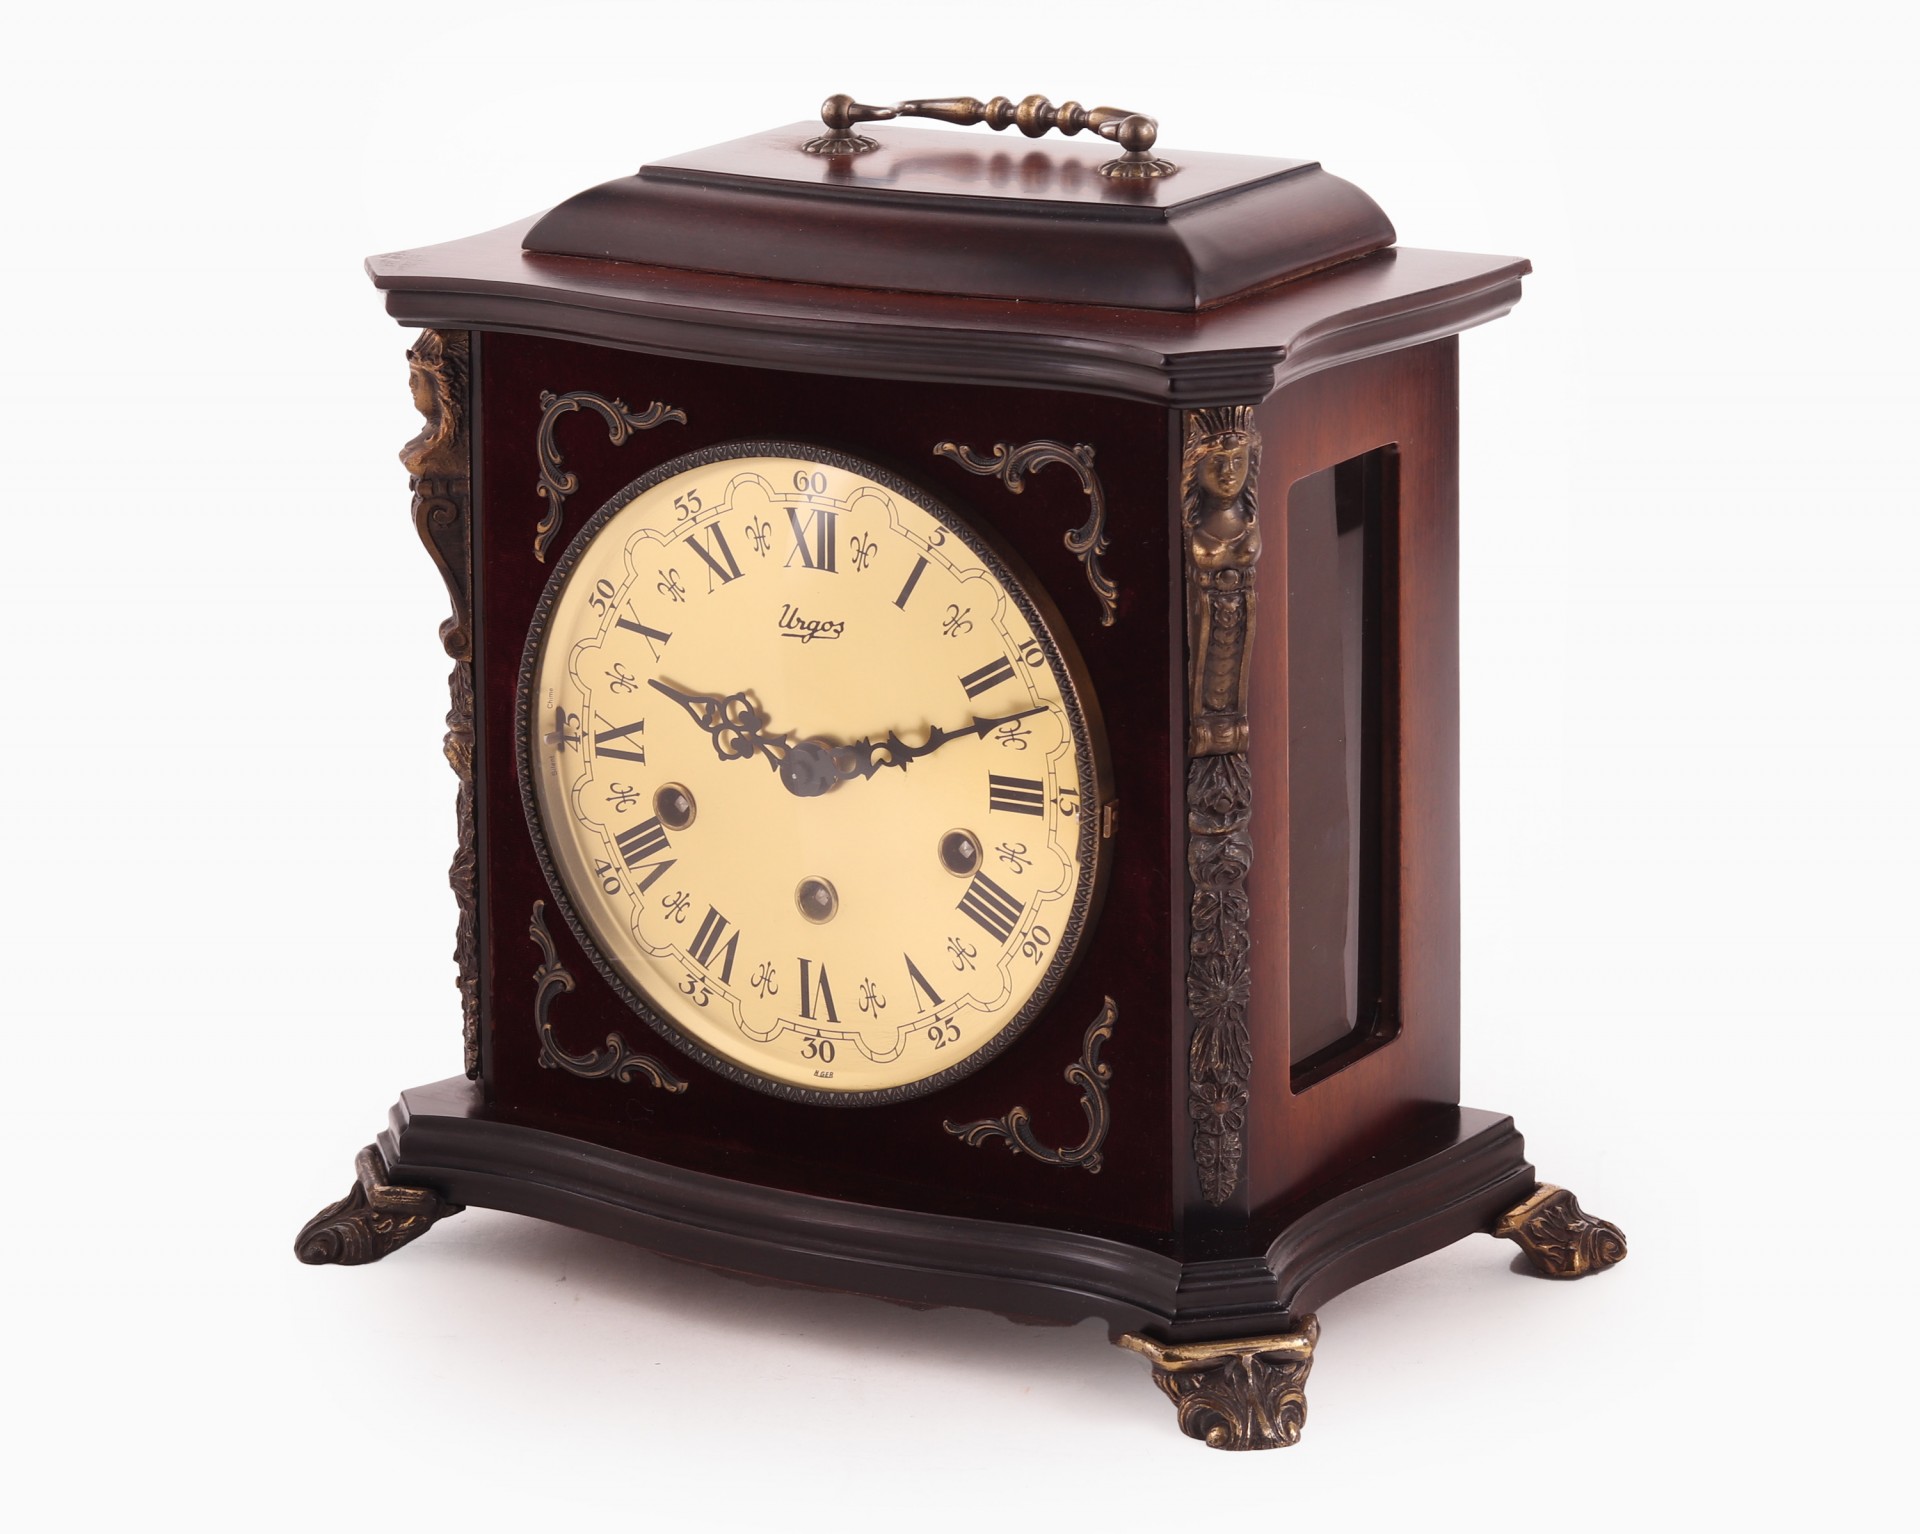 Urgos table clock